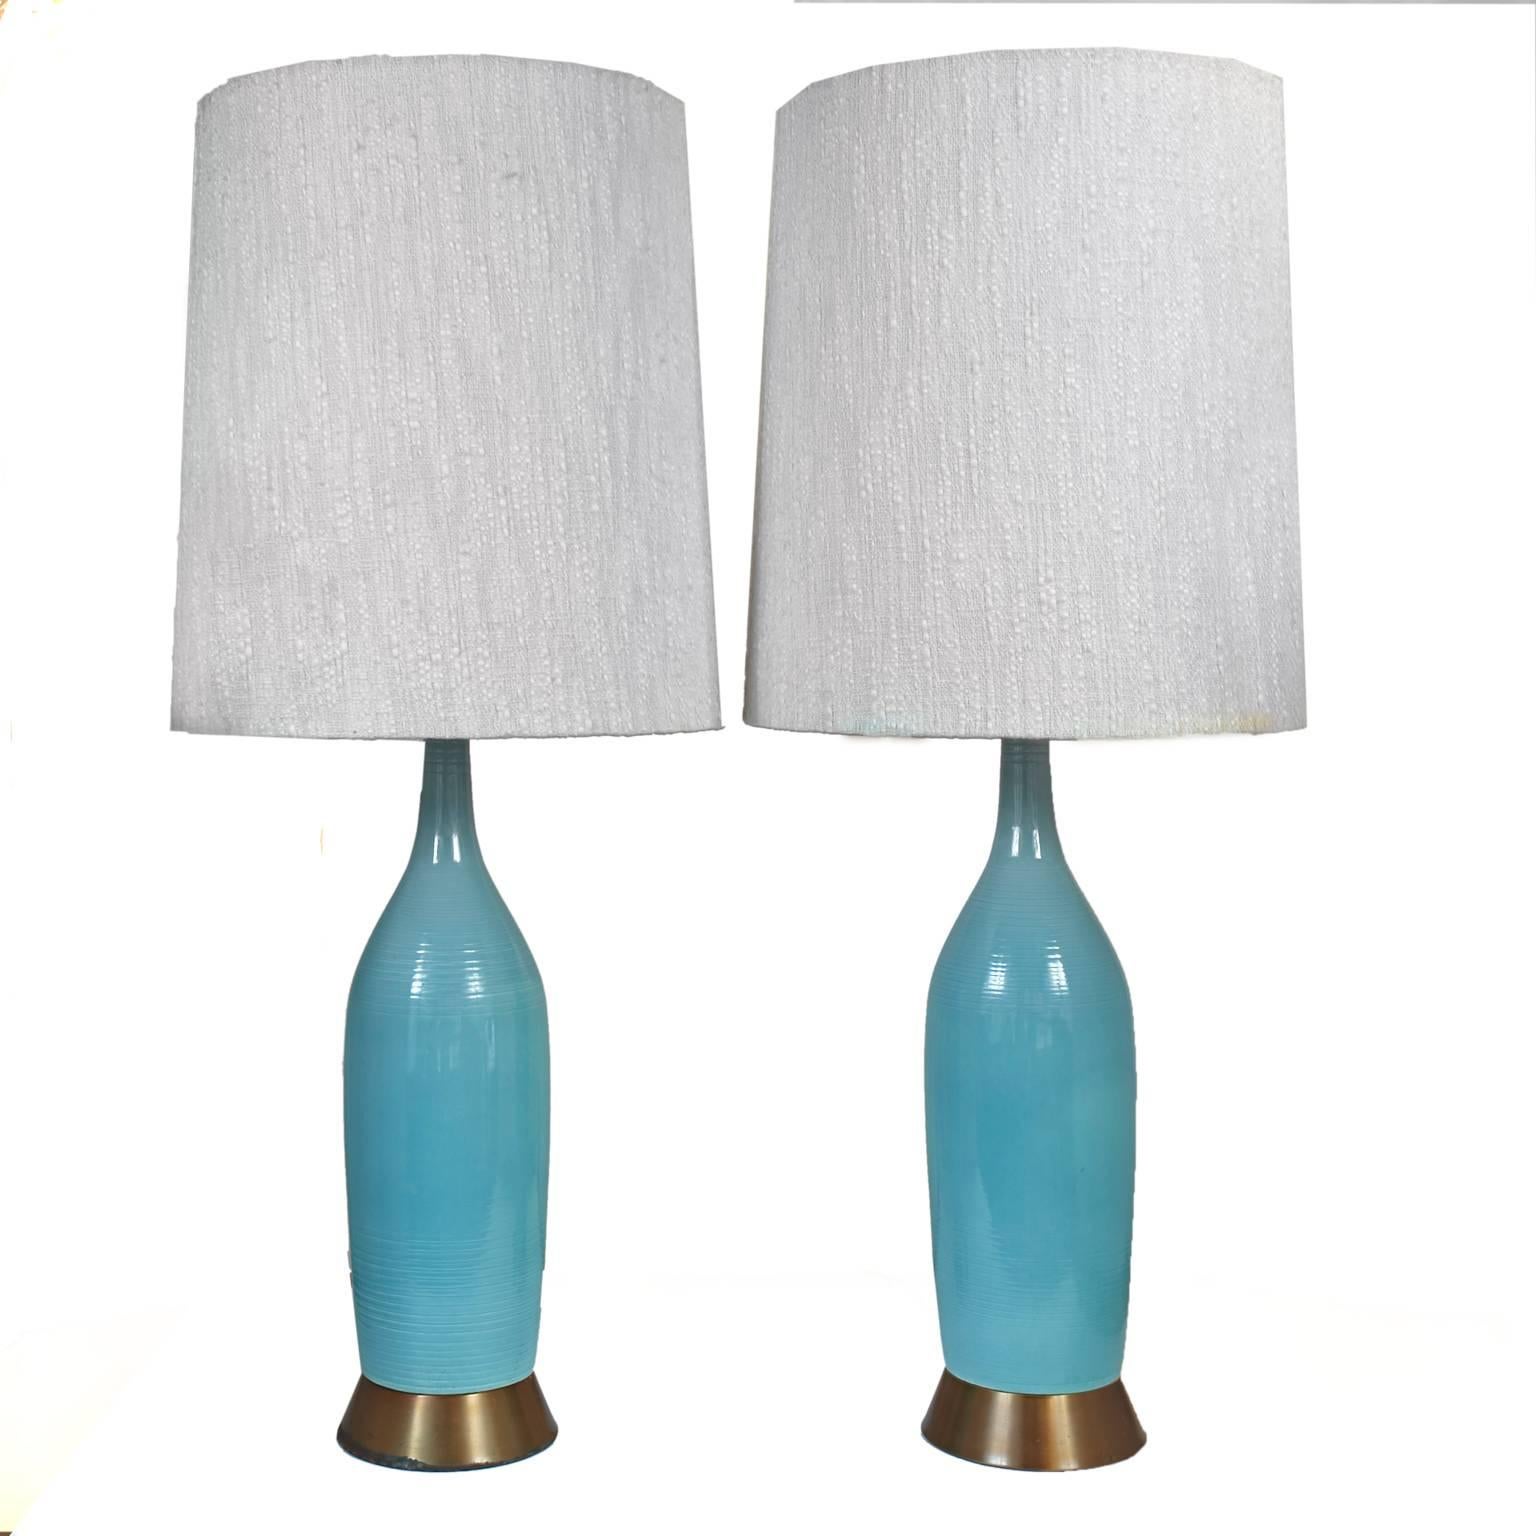 Beautiful Pair of Turquoise Blue Ceramic Mid-Century Lamps with Original Shades